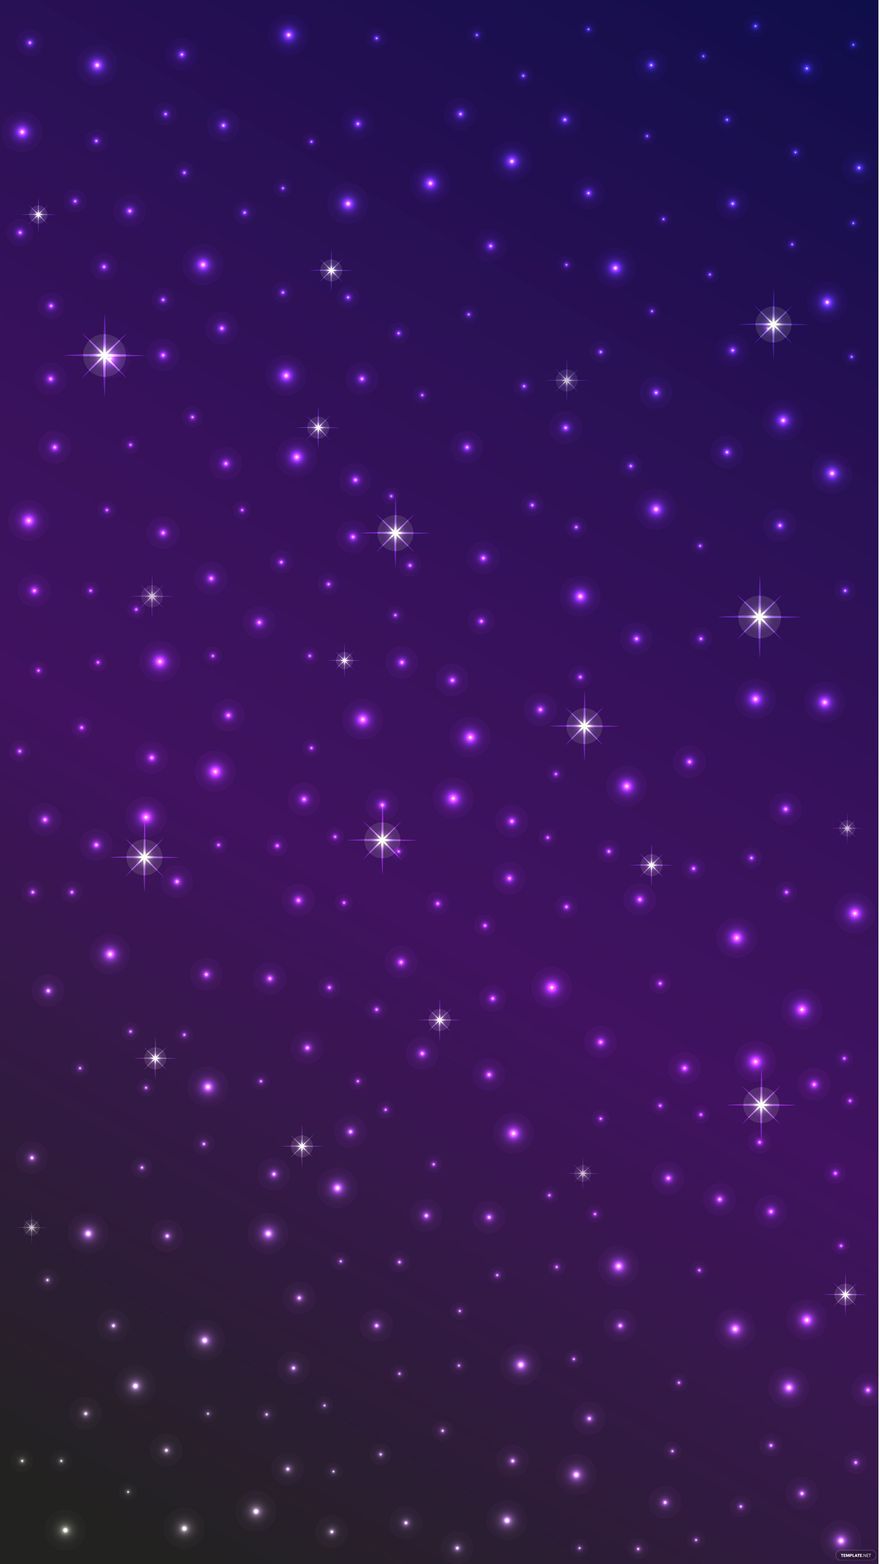 Free Stars Galaxy Background